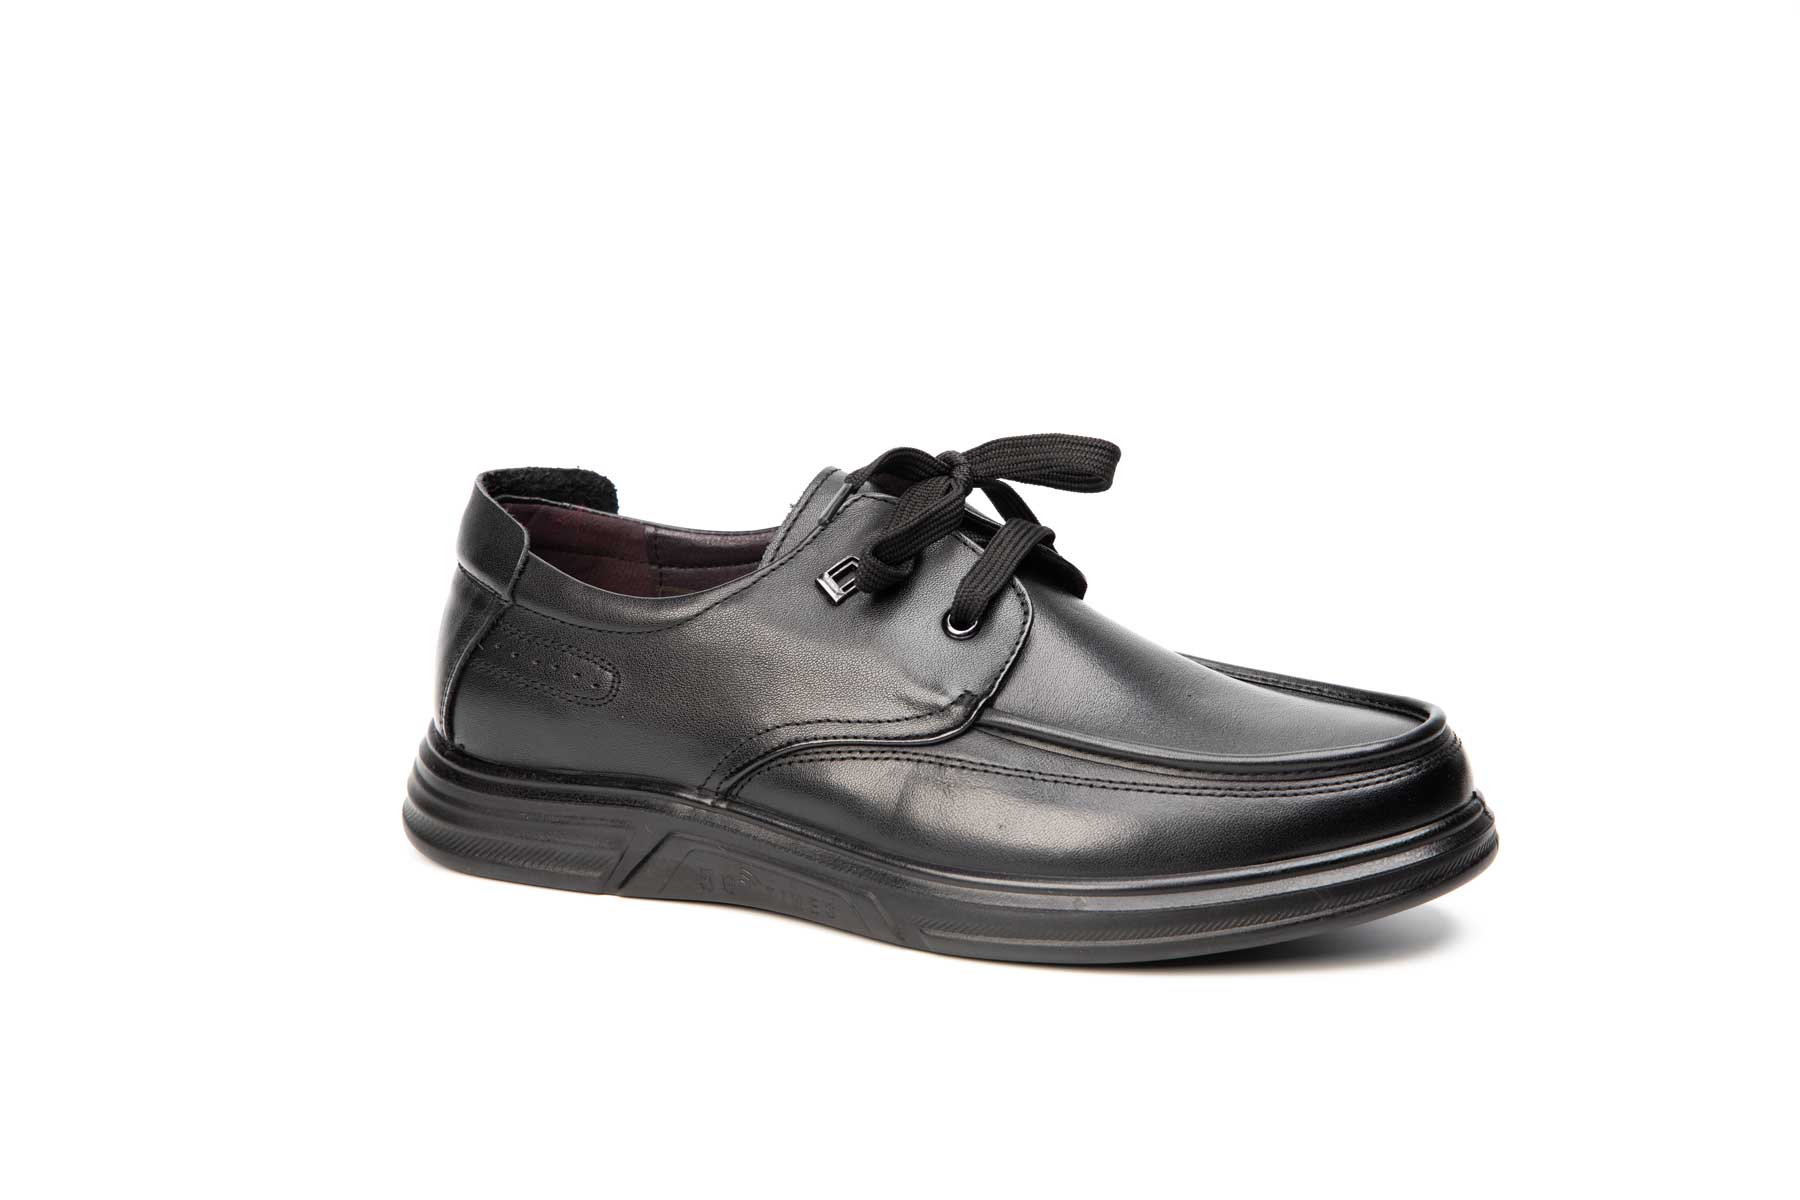 Pantofi barbati casual piele naturala 157 negru